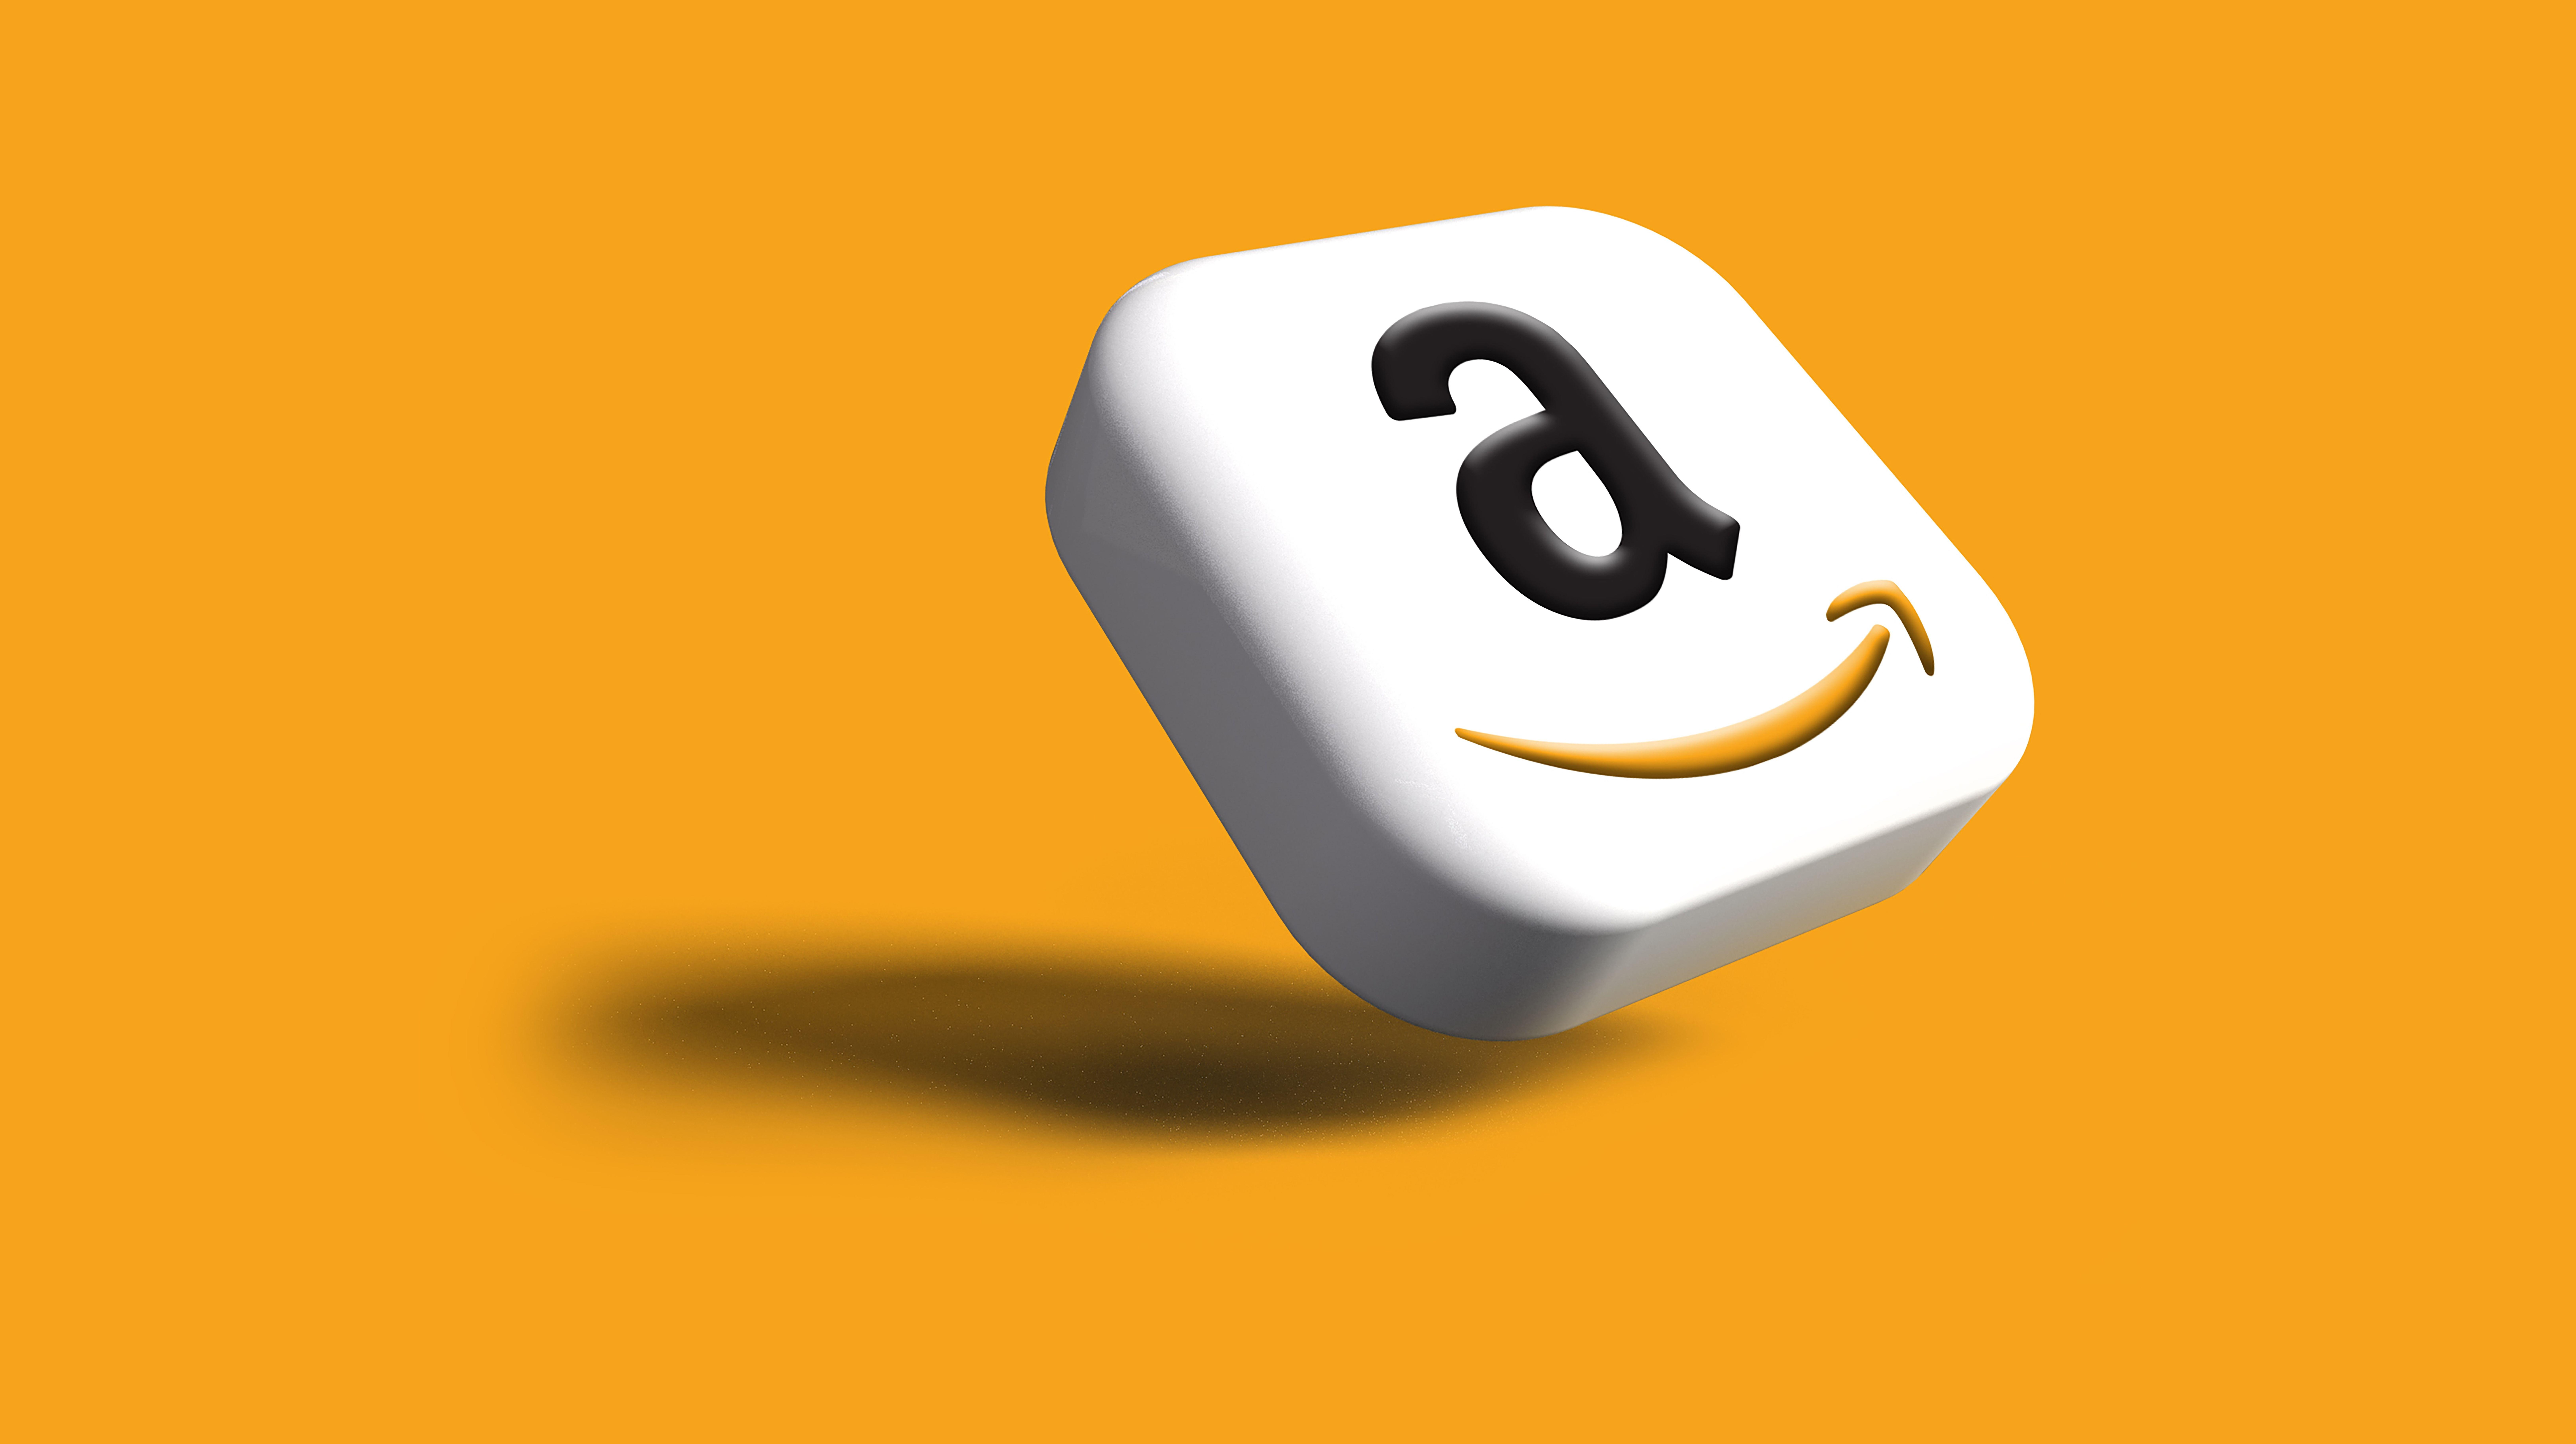 Amazon logo against a yellow background.